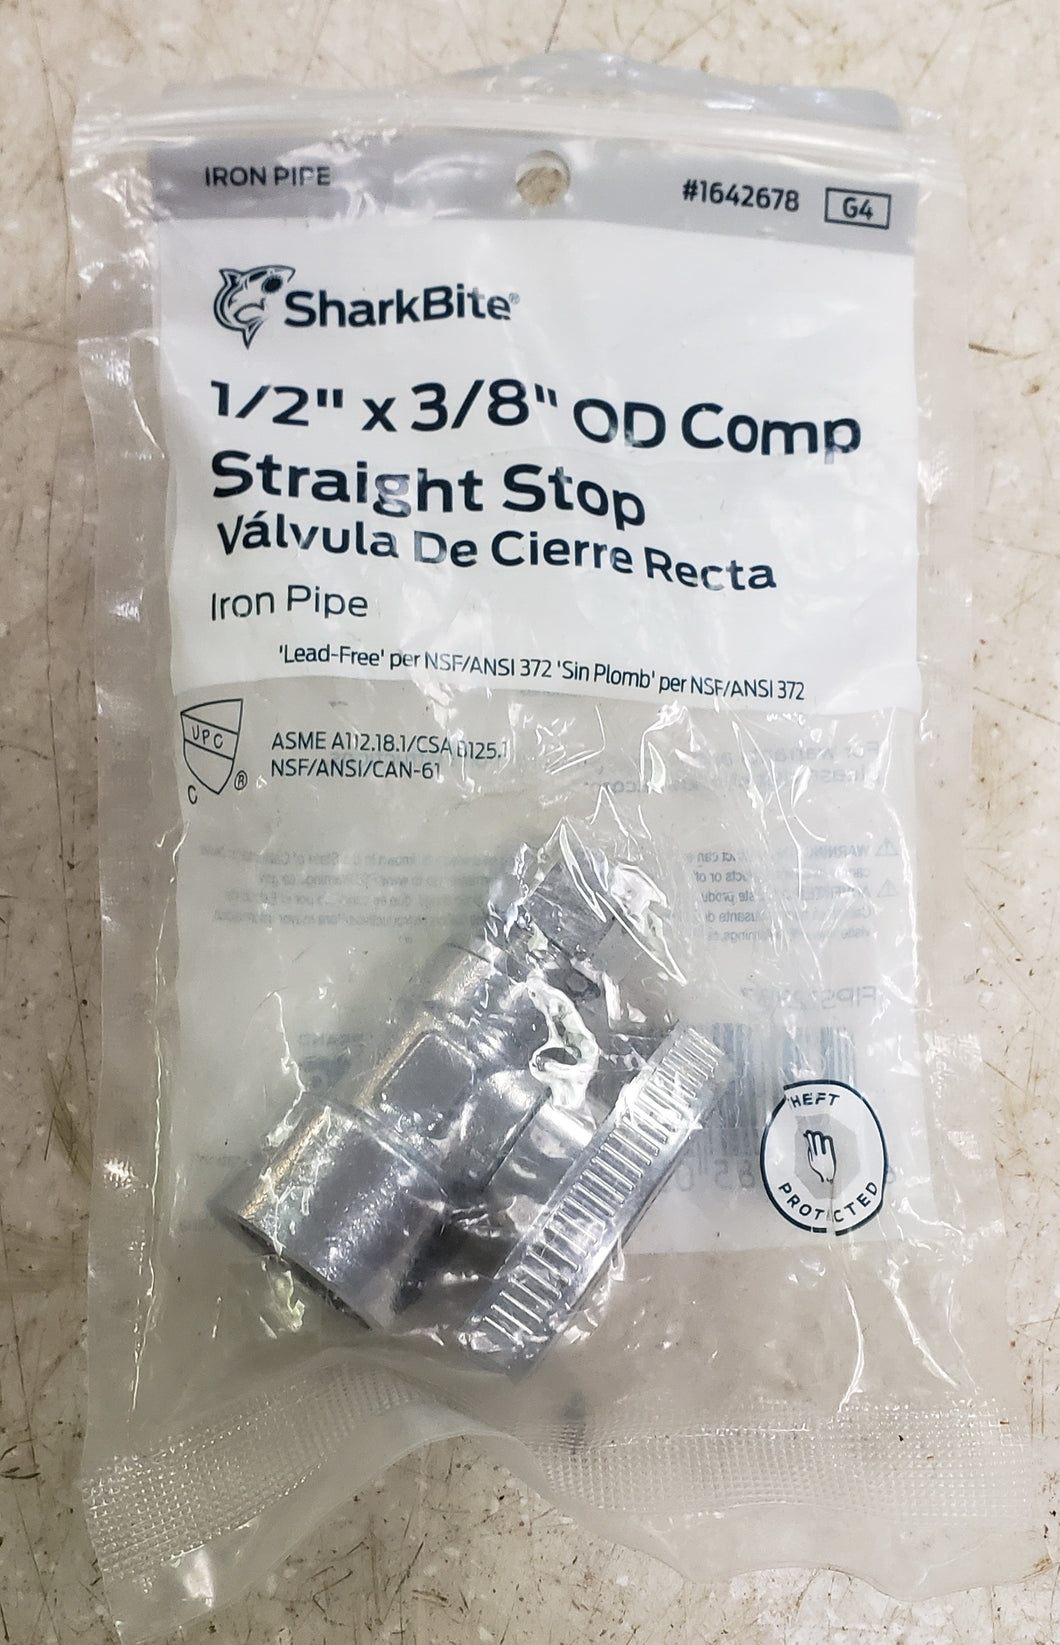 Sharkbite 1642678 1/2-in Fip x 3/8-in Od Compression Brass Quarter Turn Stop Straight Valve